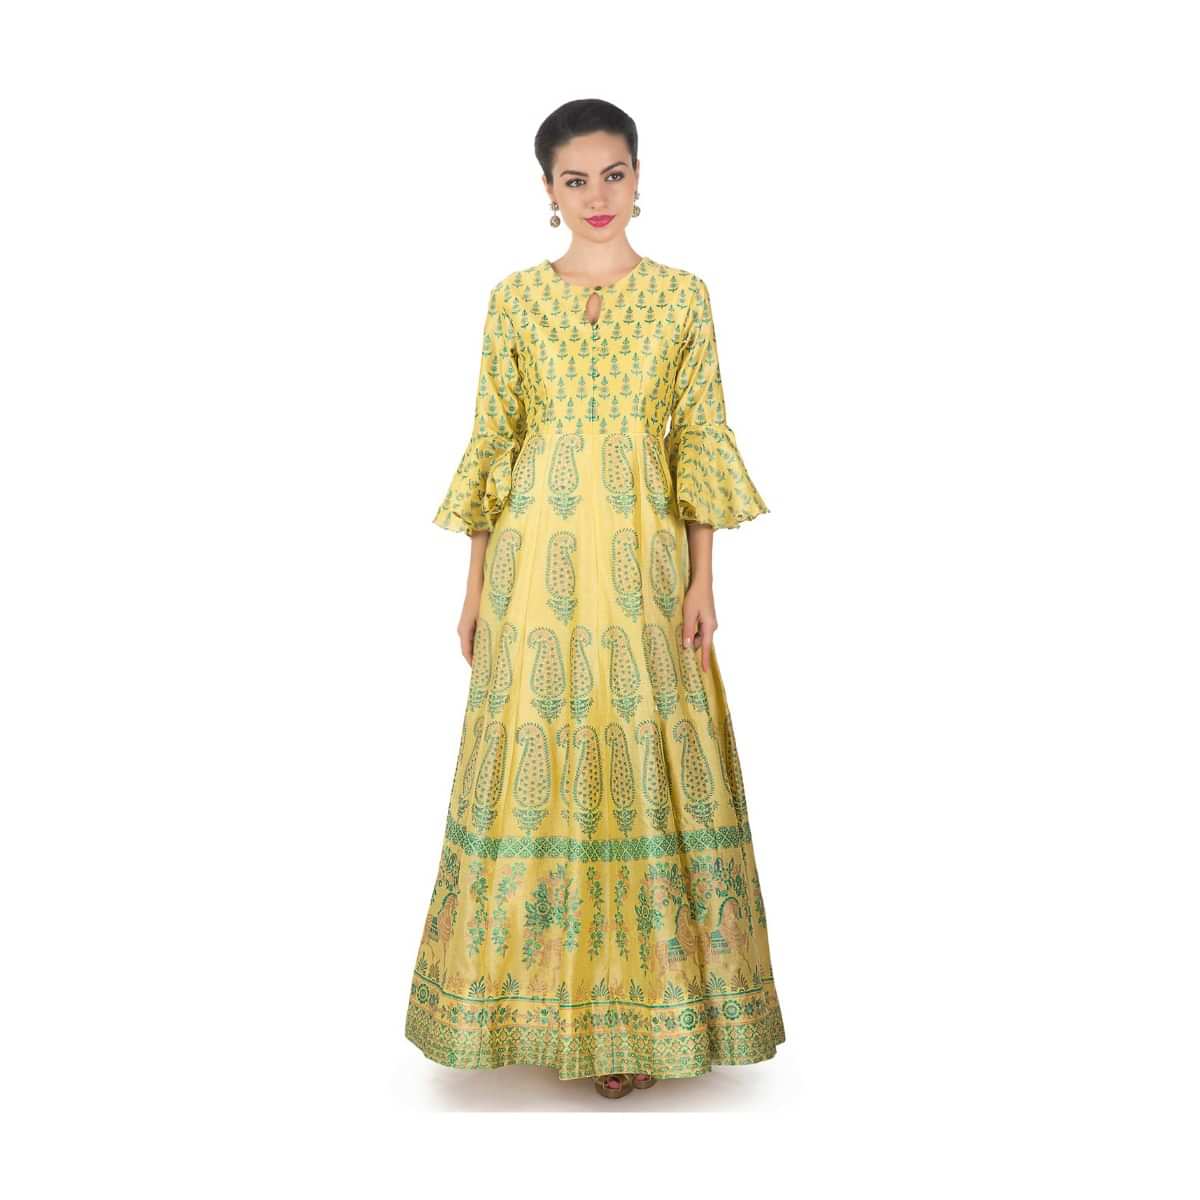 Light yellow long dress in floral printed kali only on Kalki